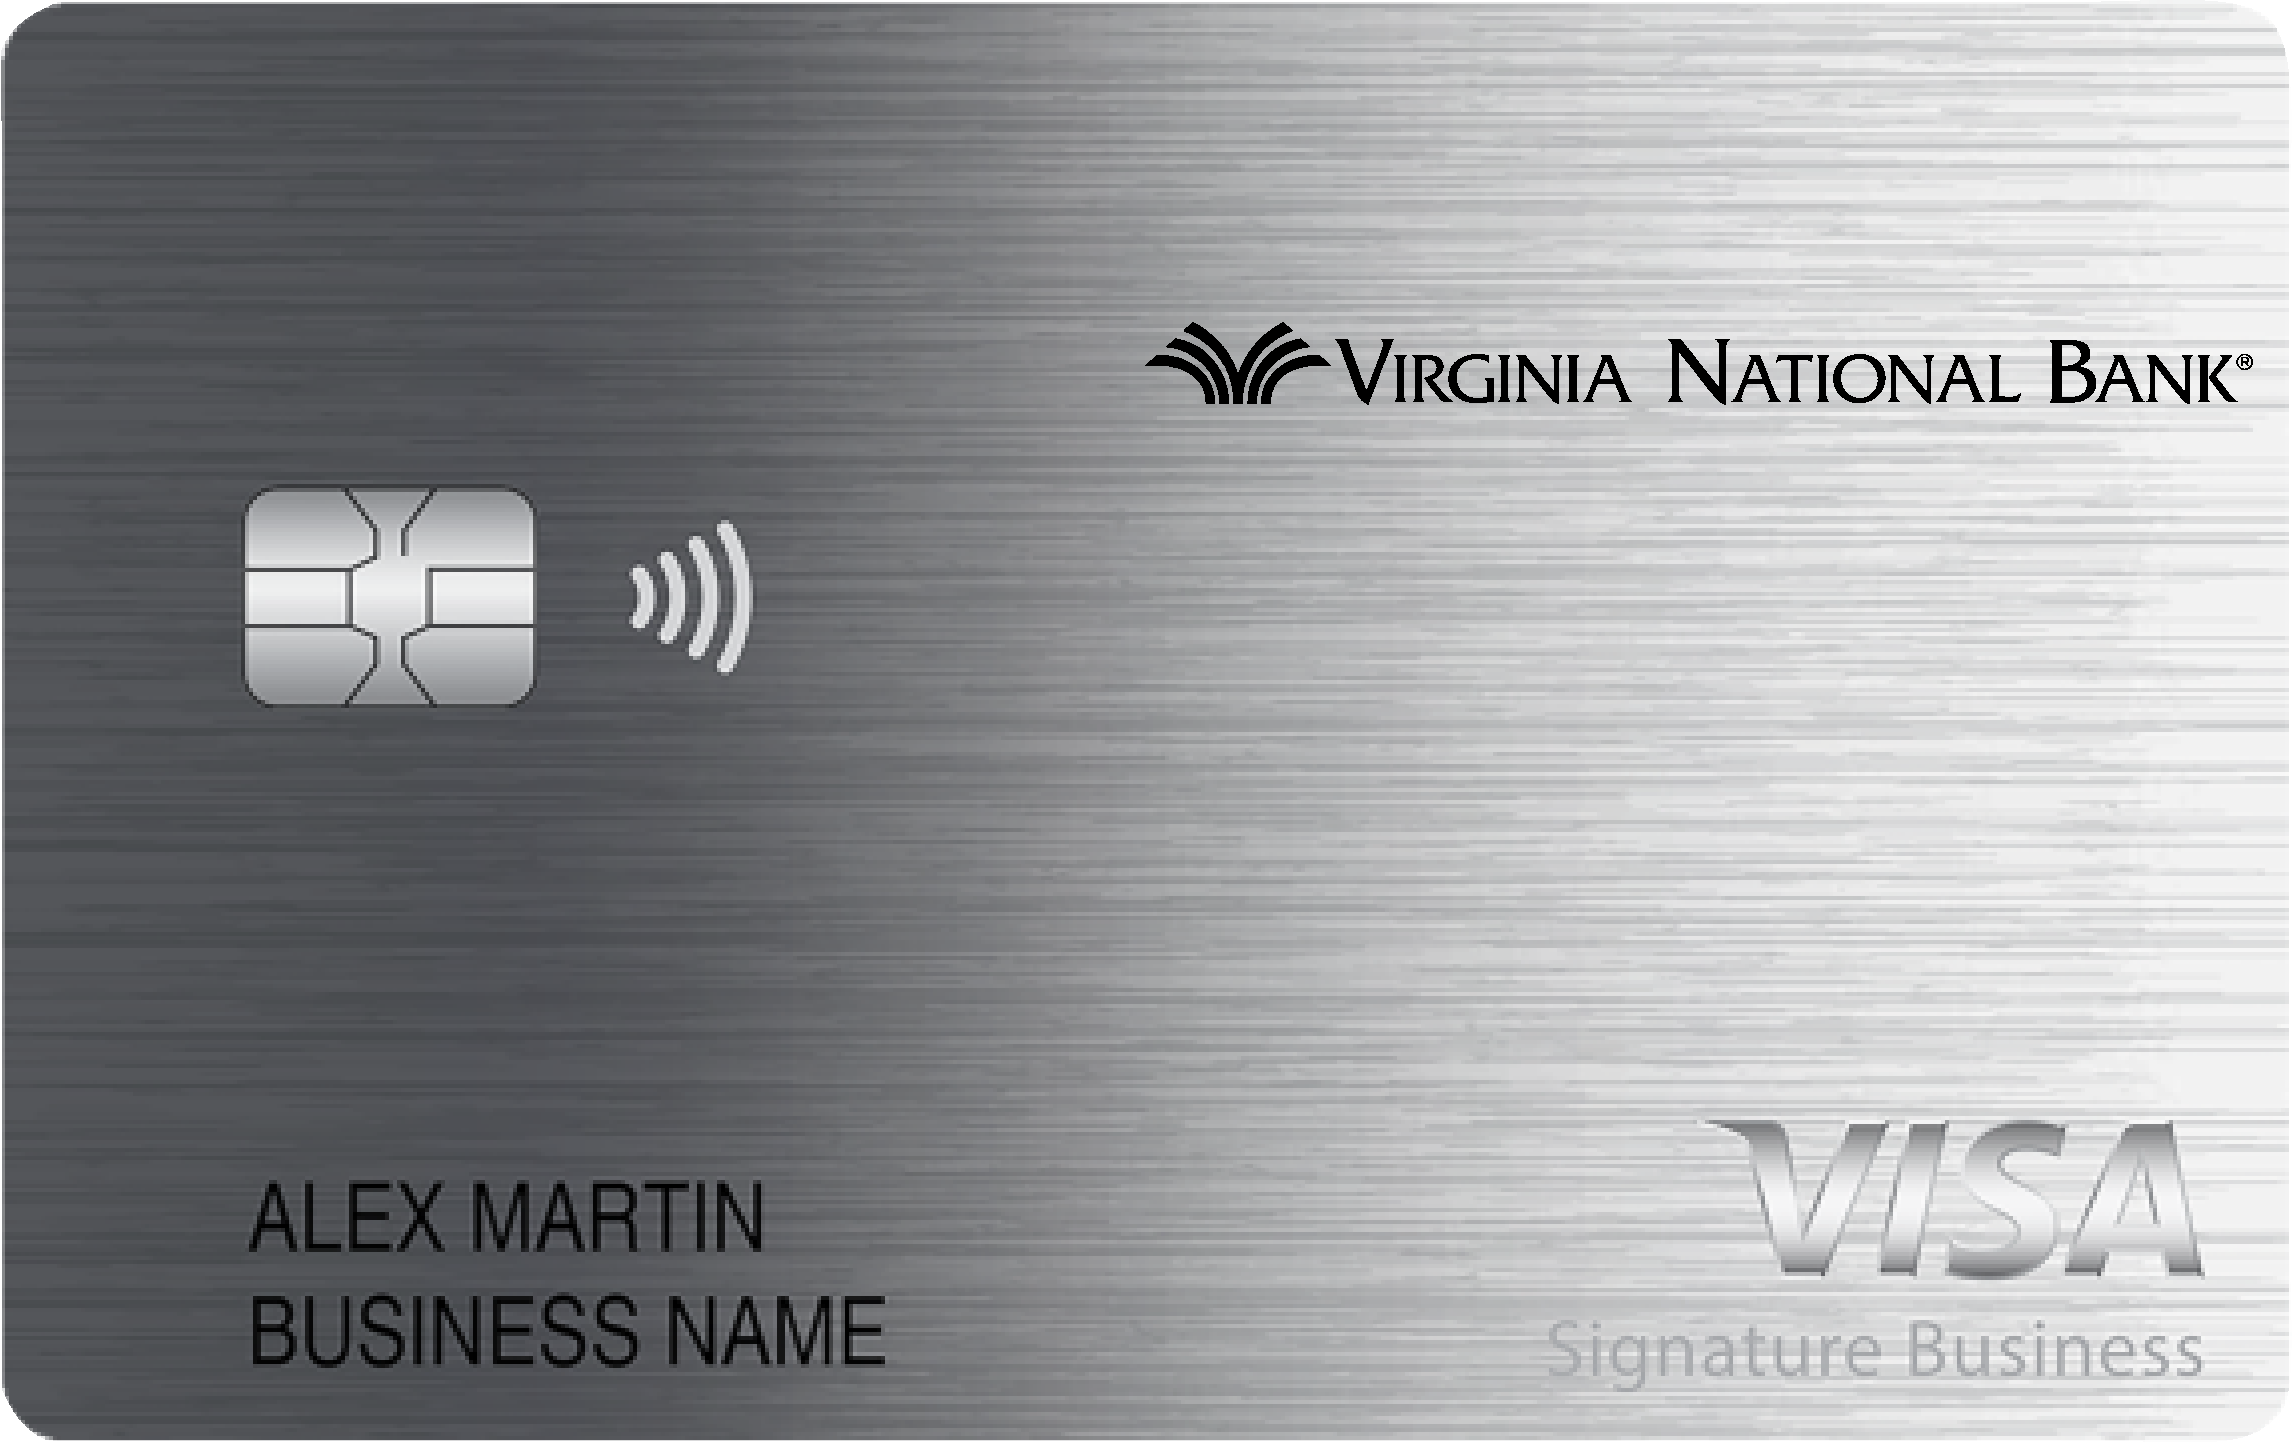 Virginia National Bank Smart Business Rewards Card